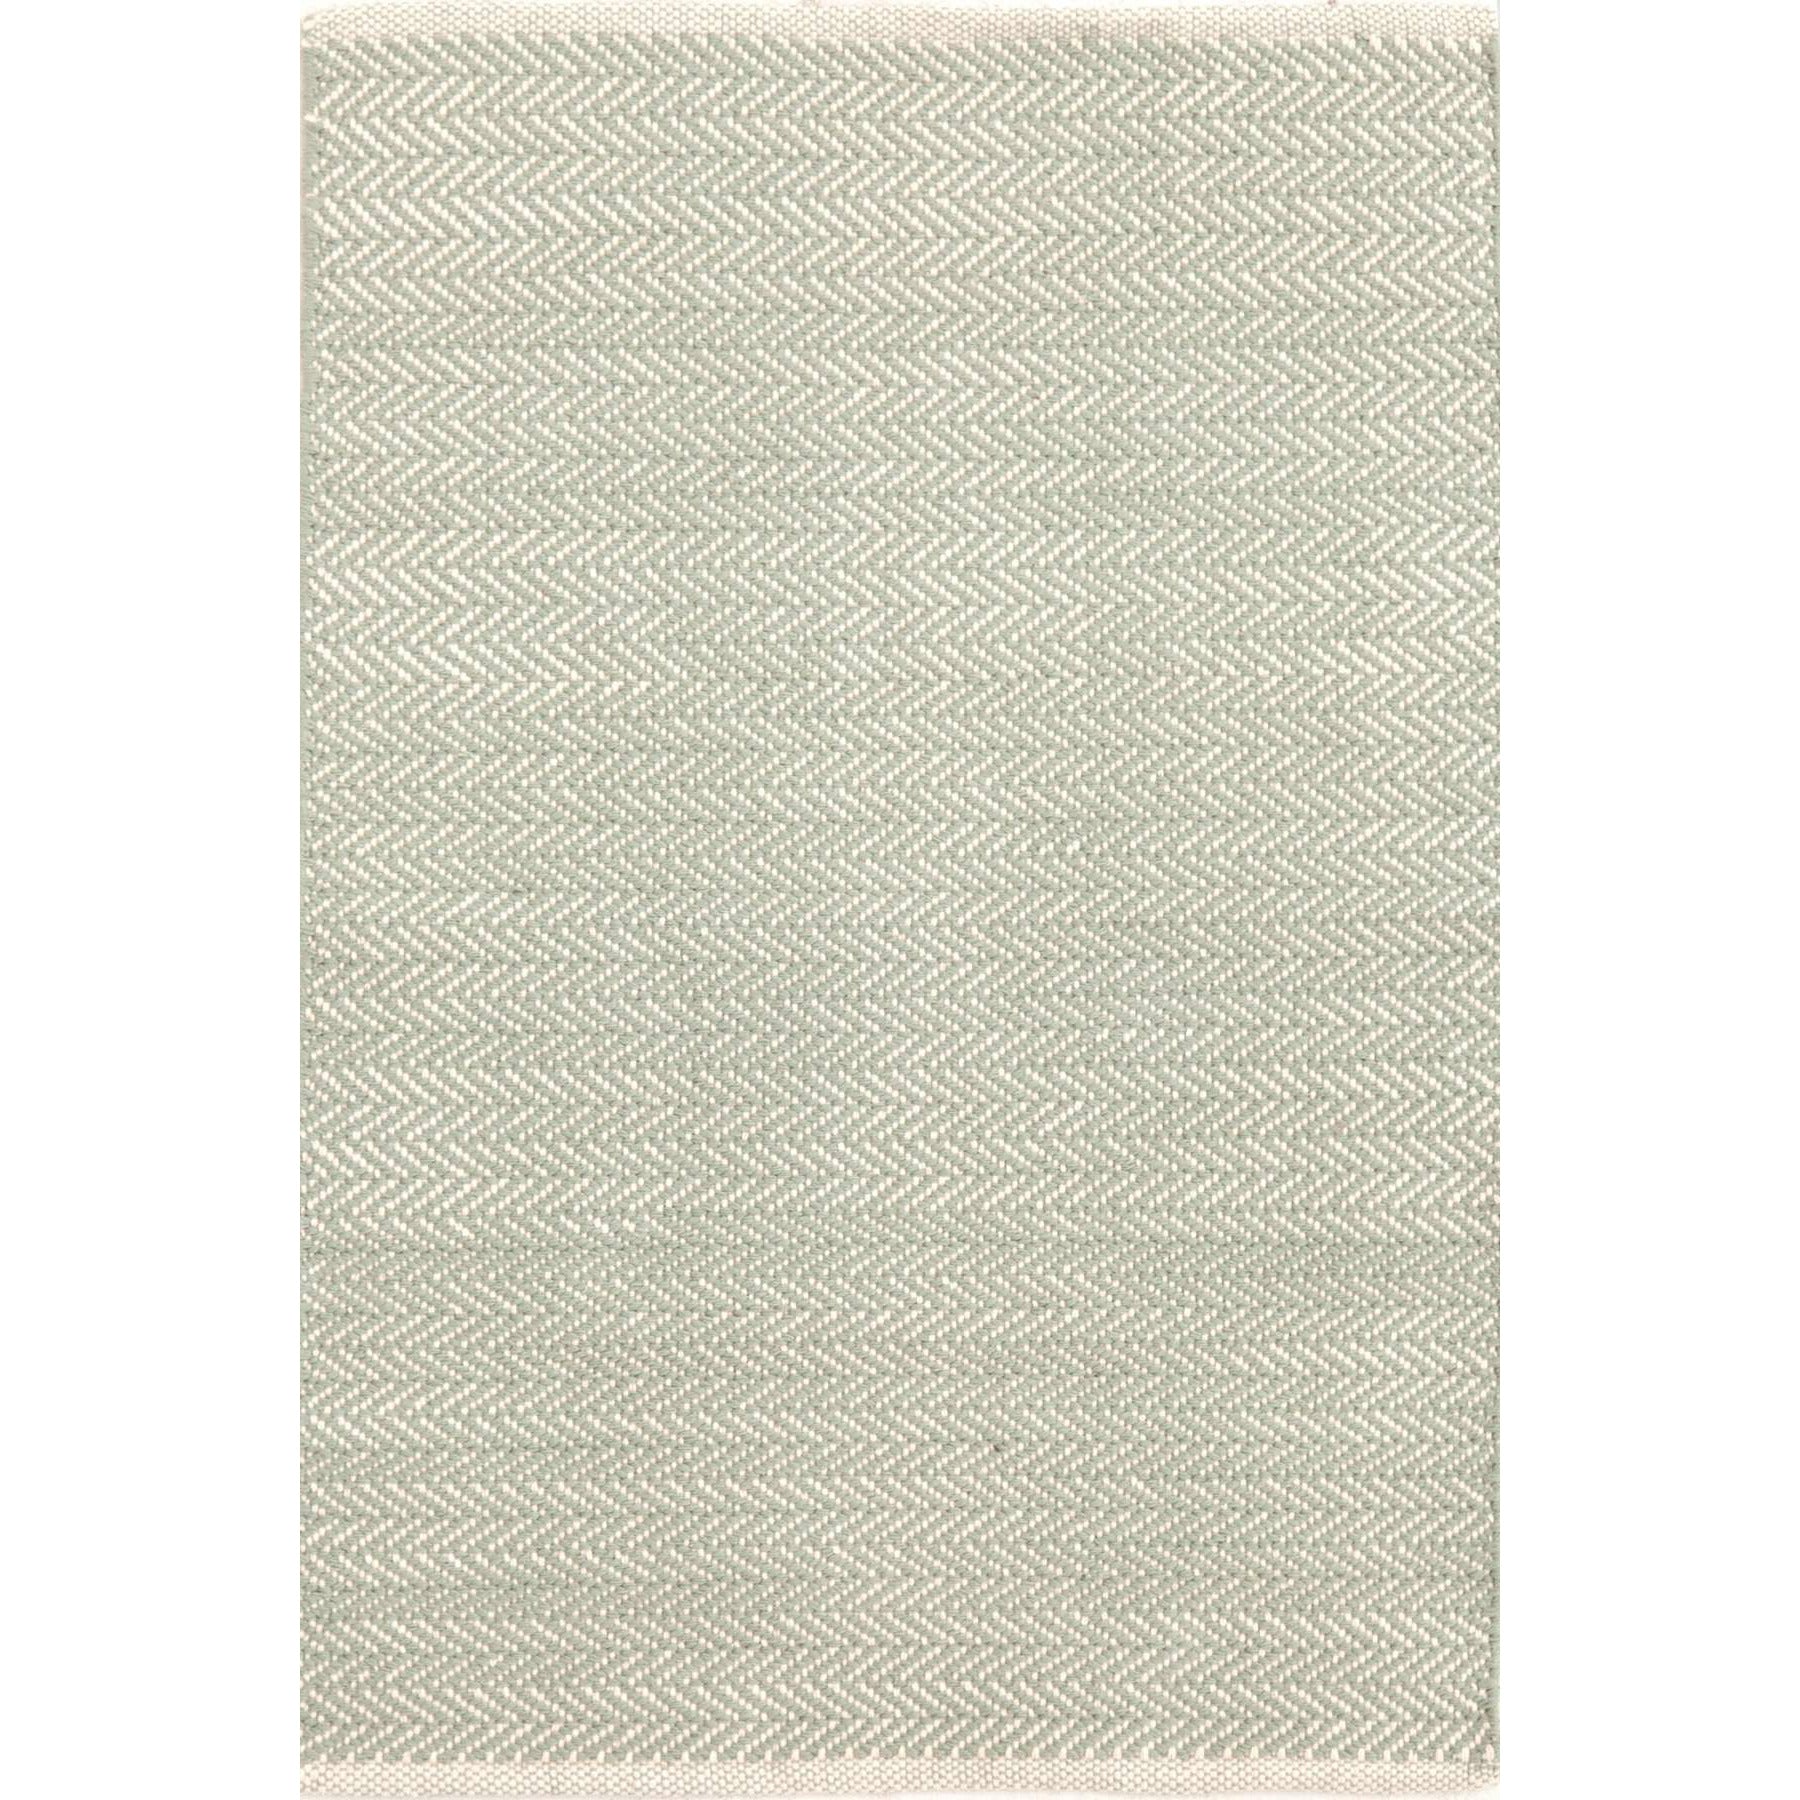 Dash & Albert Herringbone Ocean Woven Cotton Rug